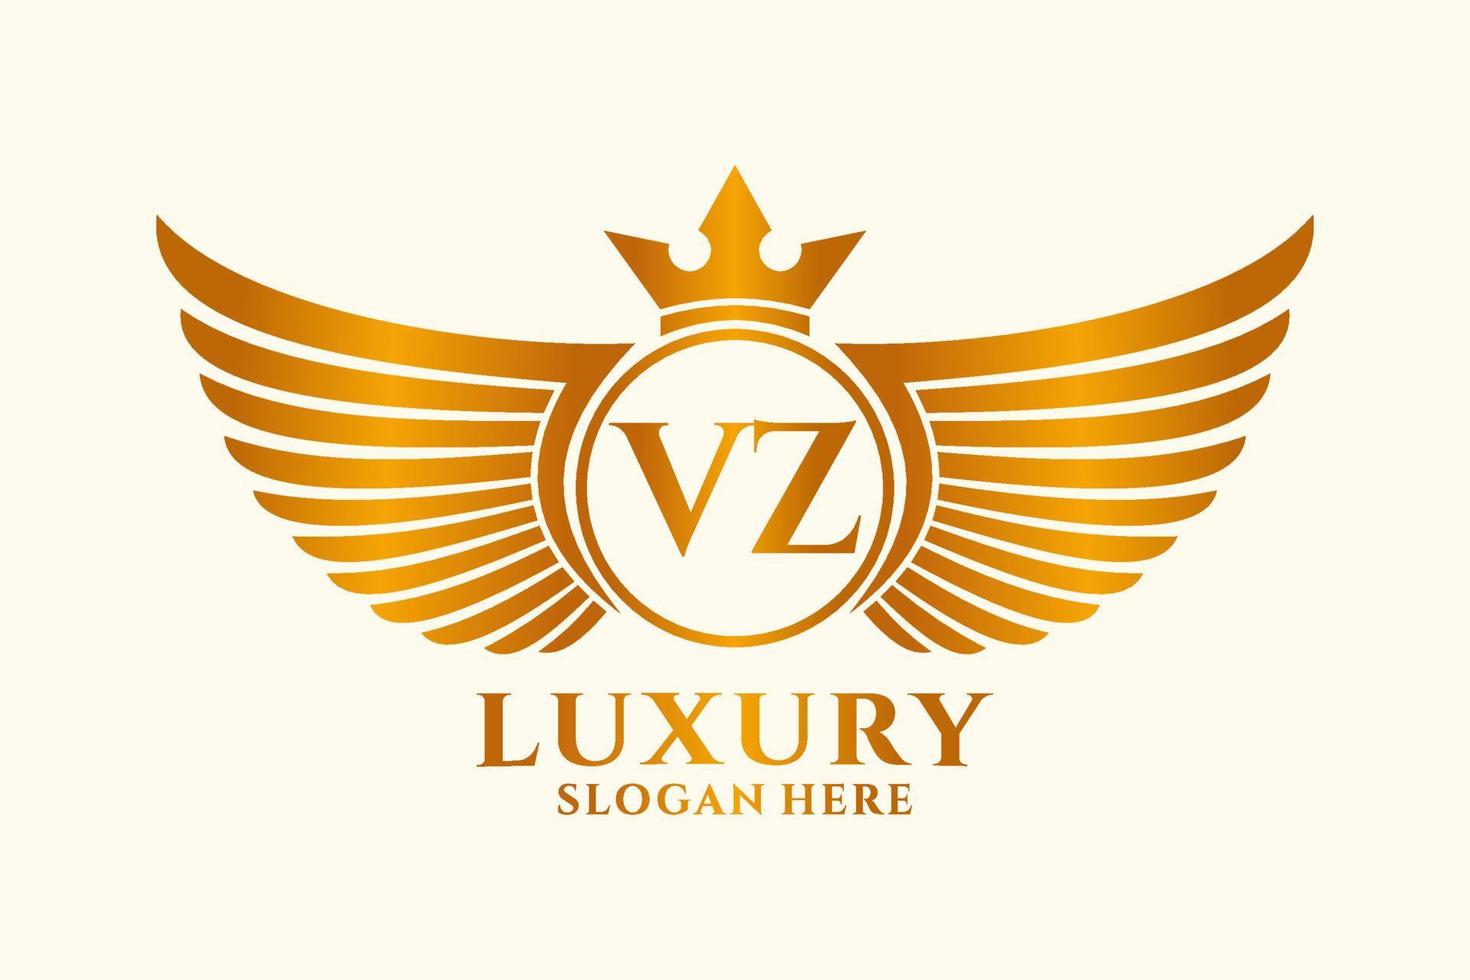 luxe Koninklijk vleugel brief vz kam goud kleur logo vector, zege logo, kam logo, vleugel logo, vector logo sjabloon.